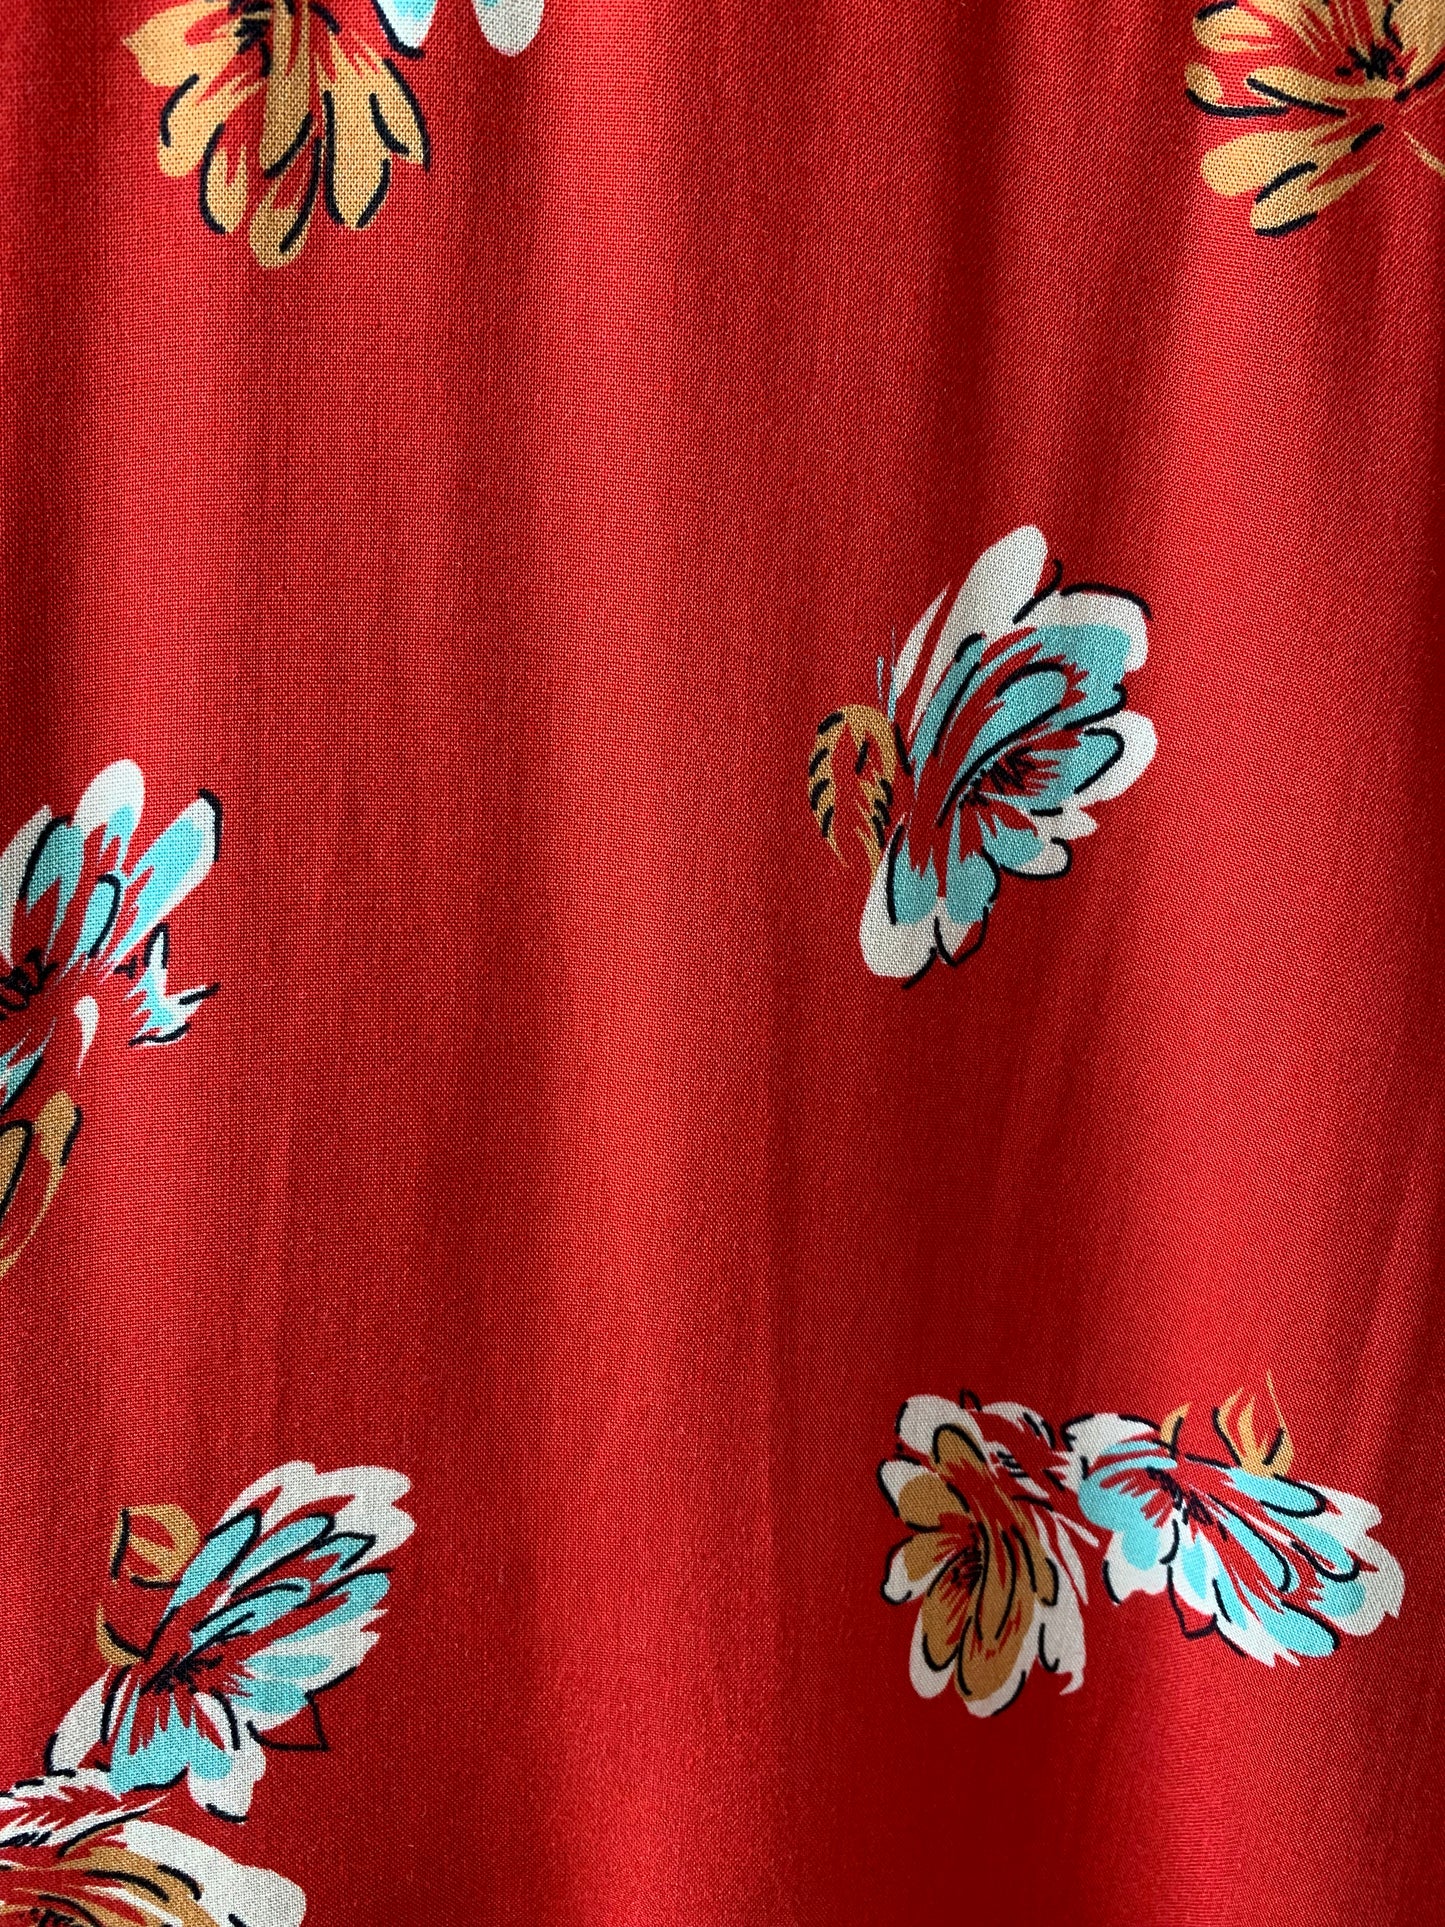 SAMPLE Wrap Dress red floral L